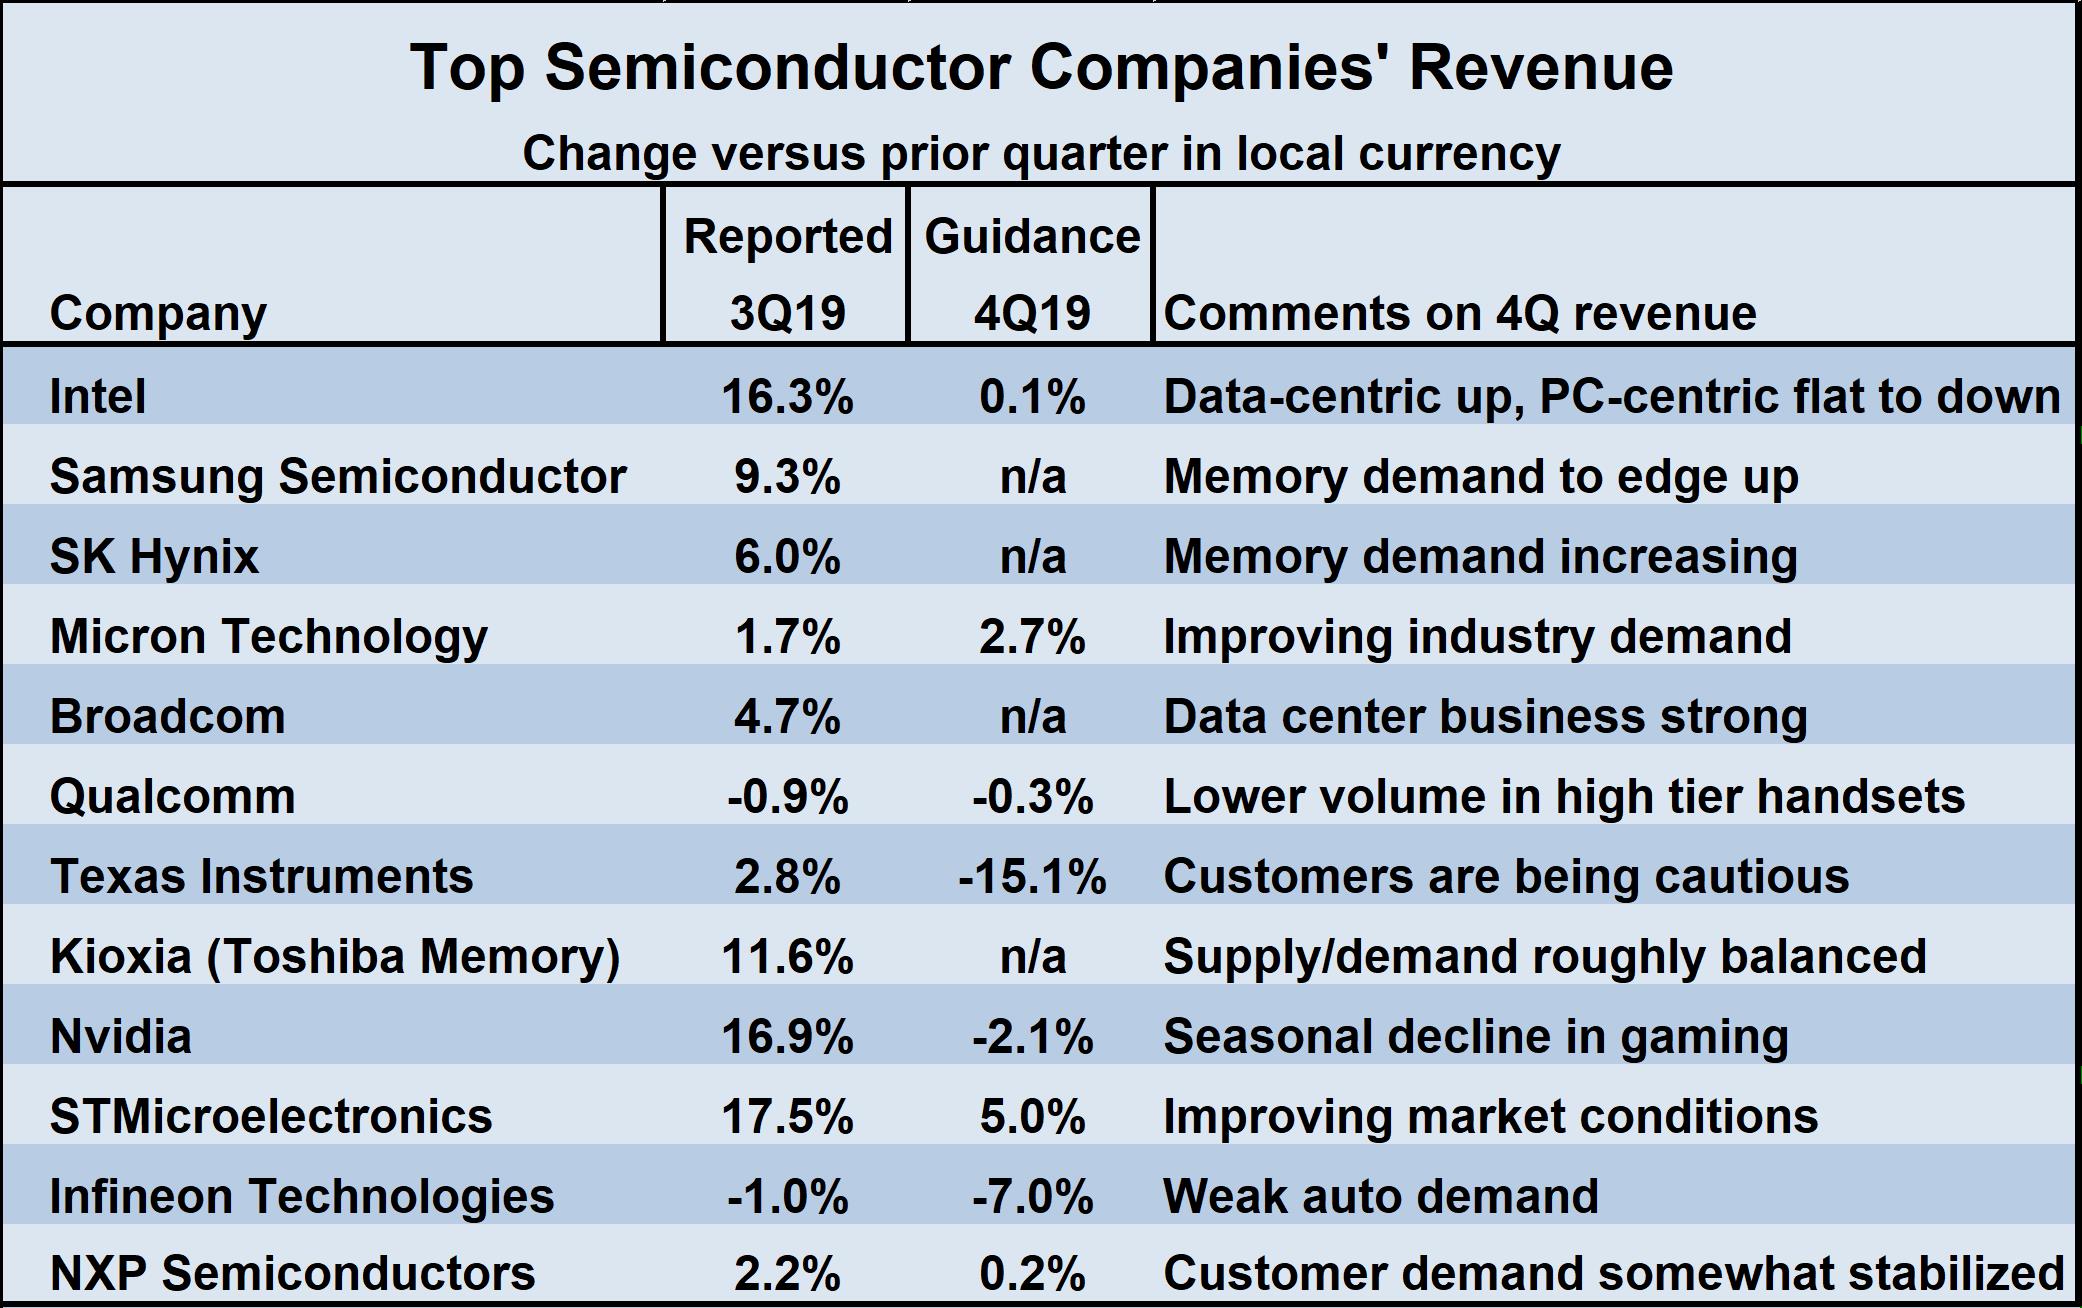 Top semiconductor companies' revenue